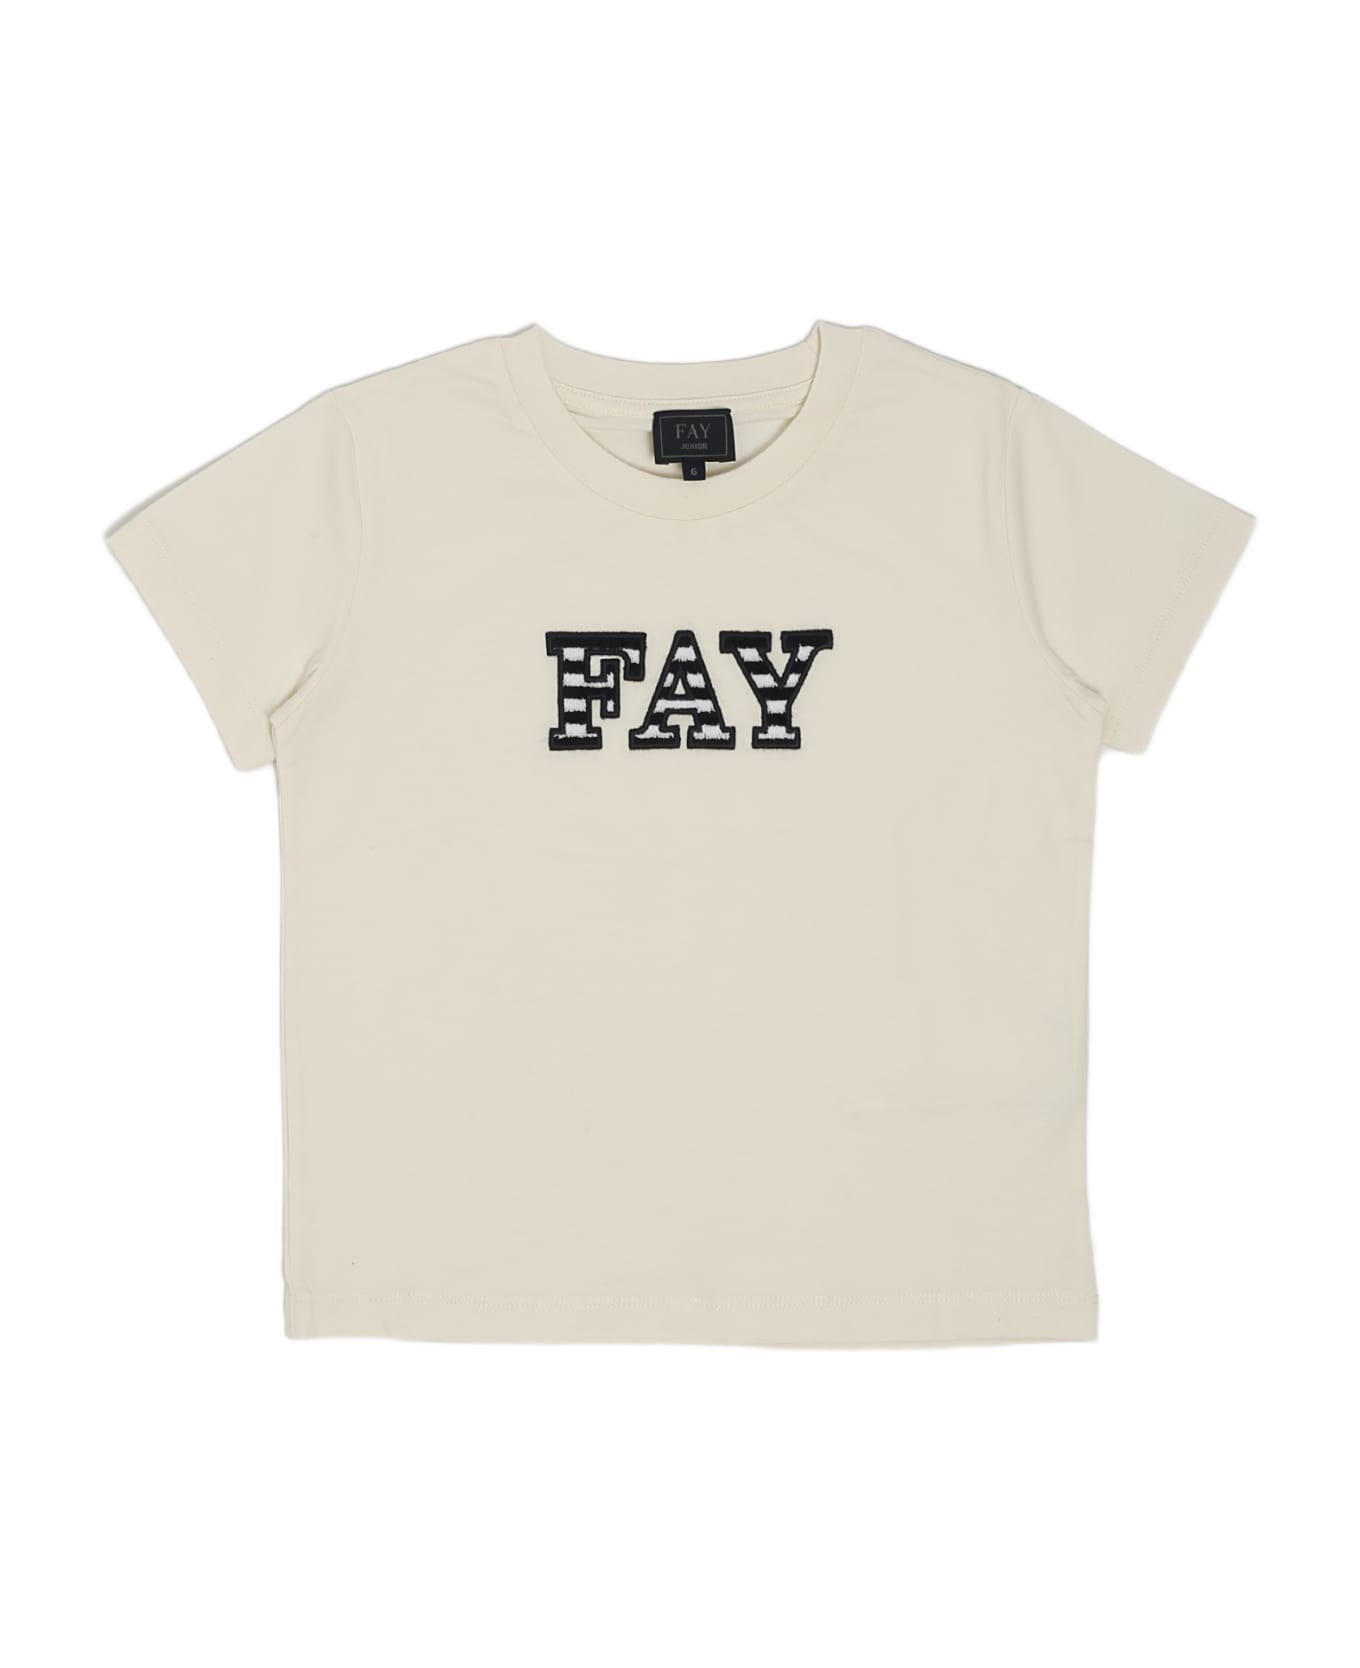 Fay T-shirt T-shirt - AVORIO